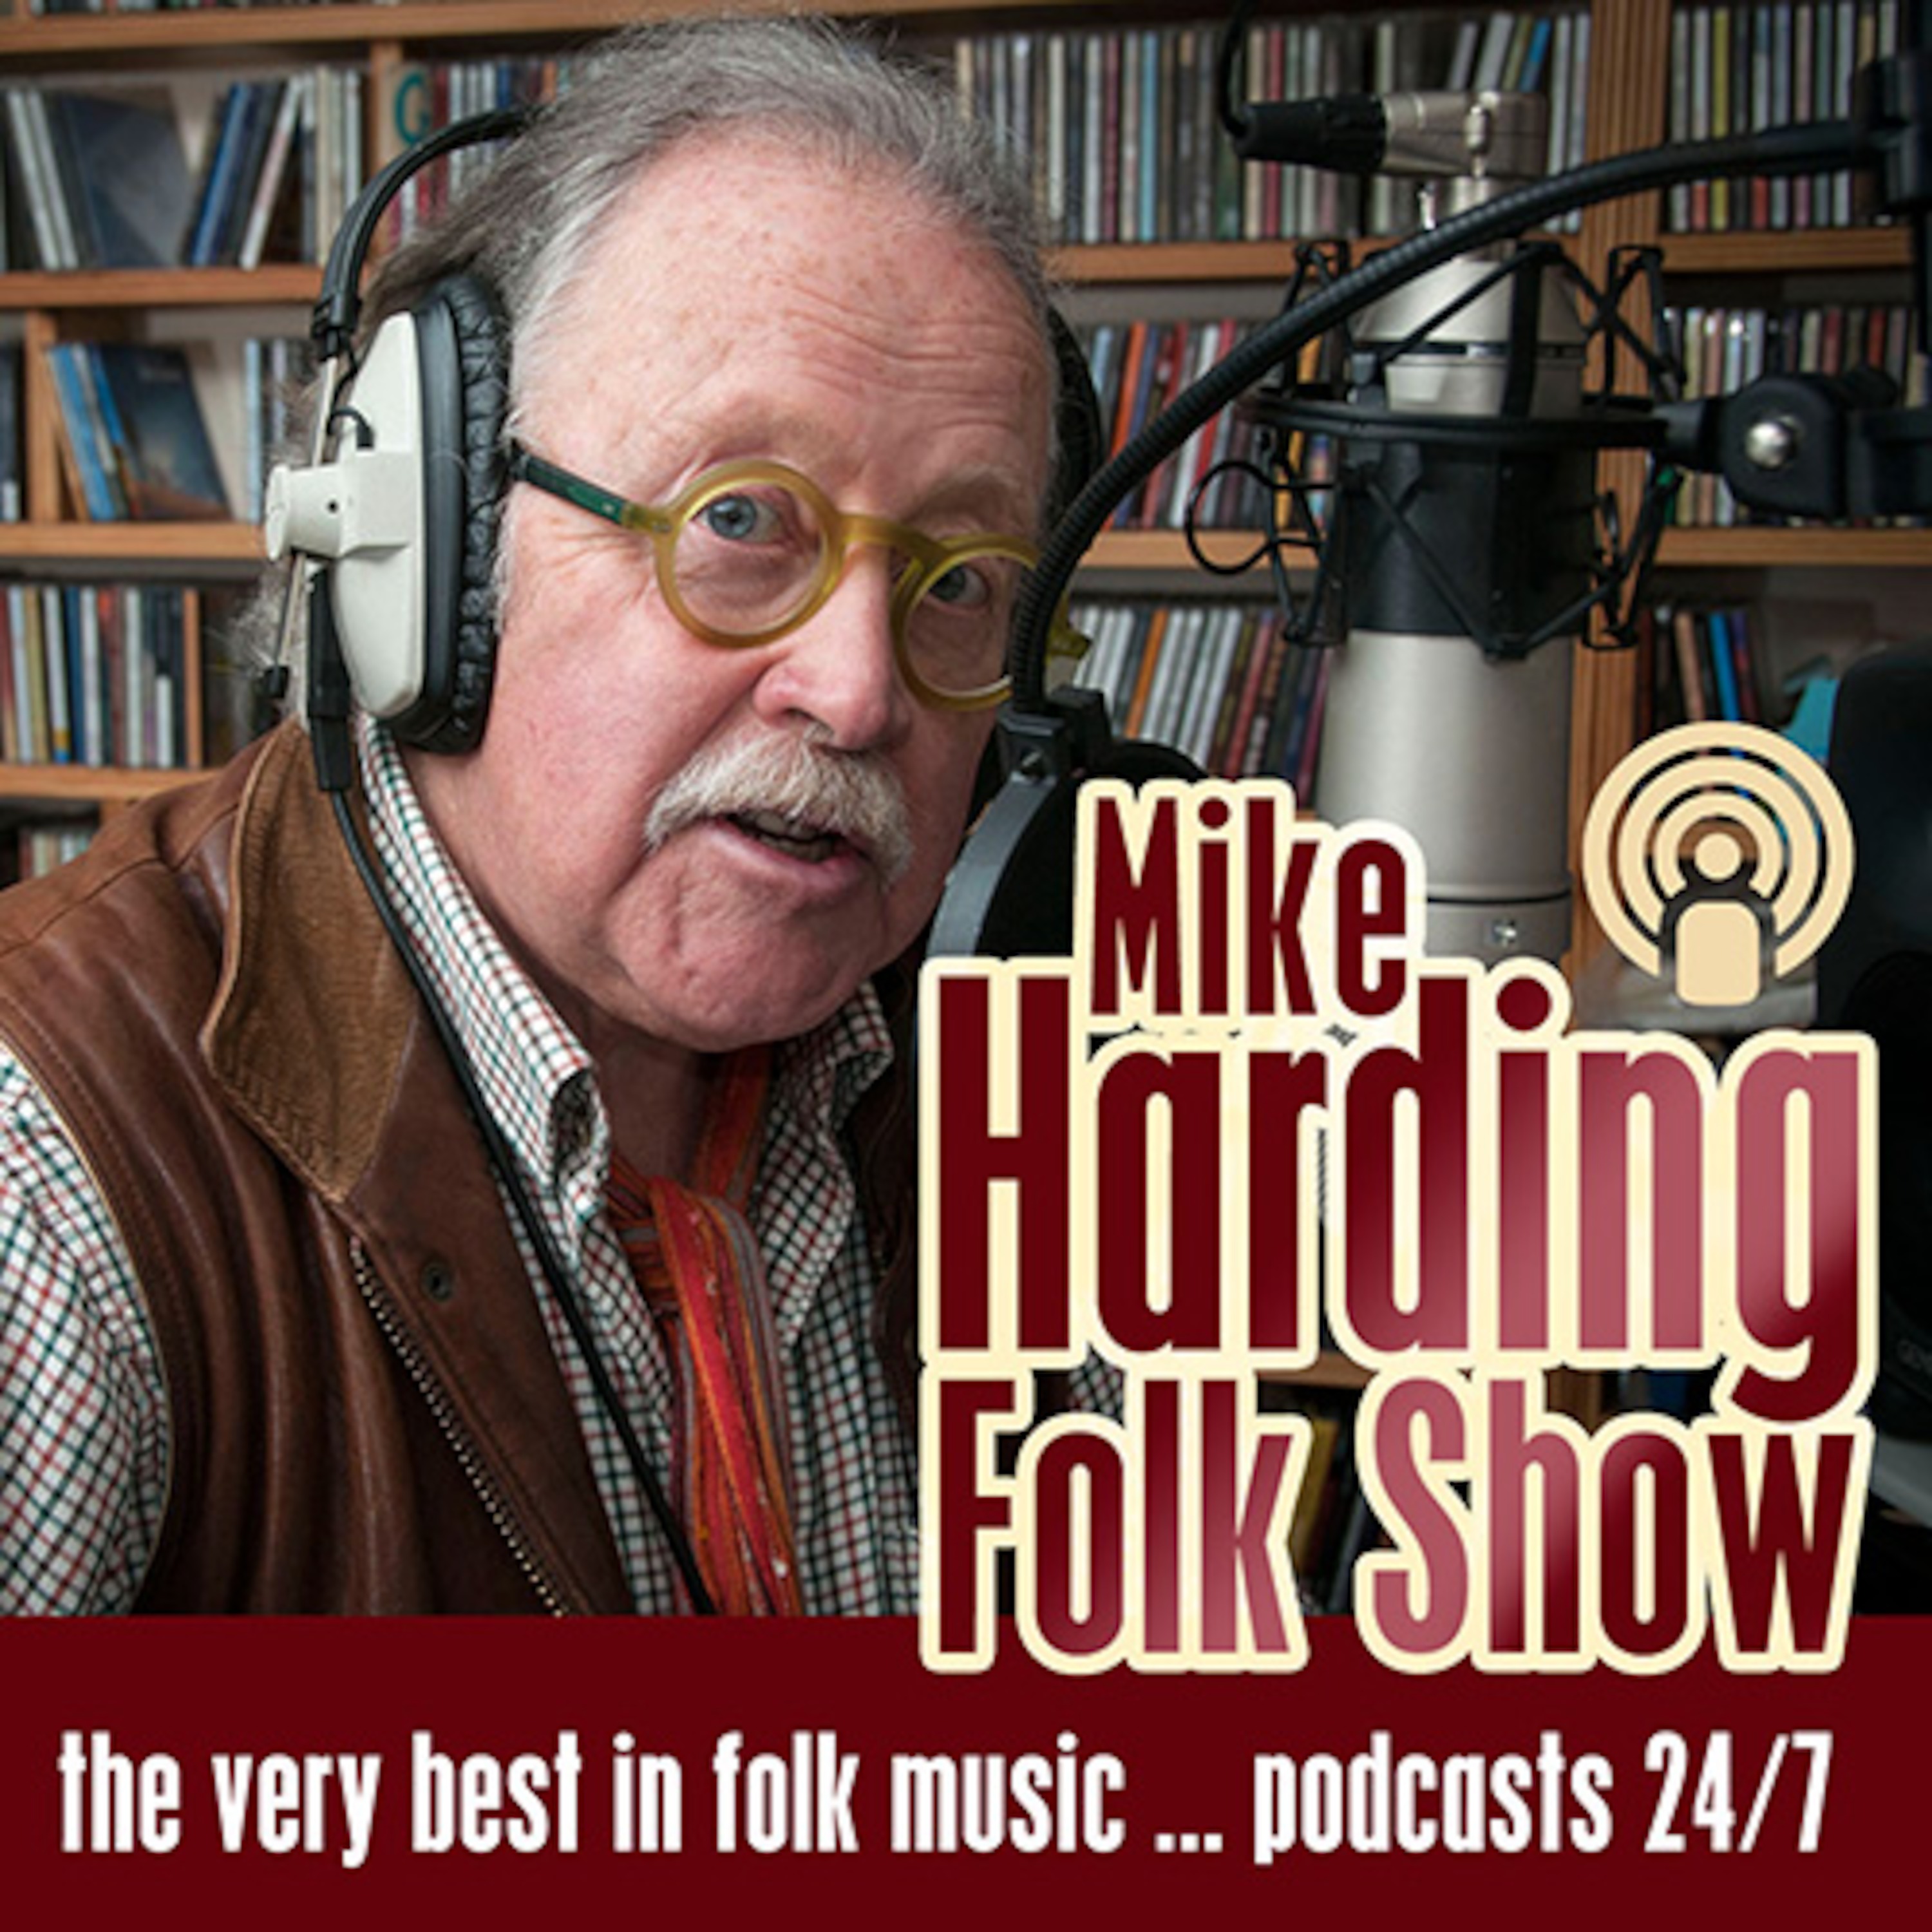 Mike Harding Folk Show 195